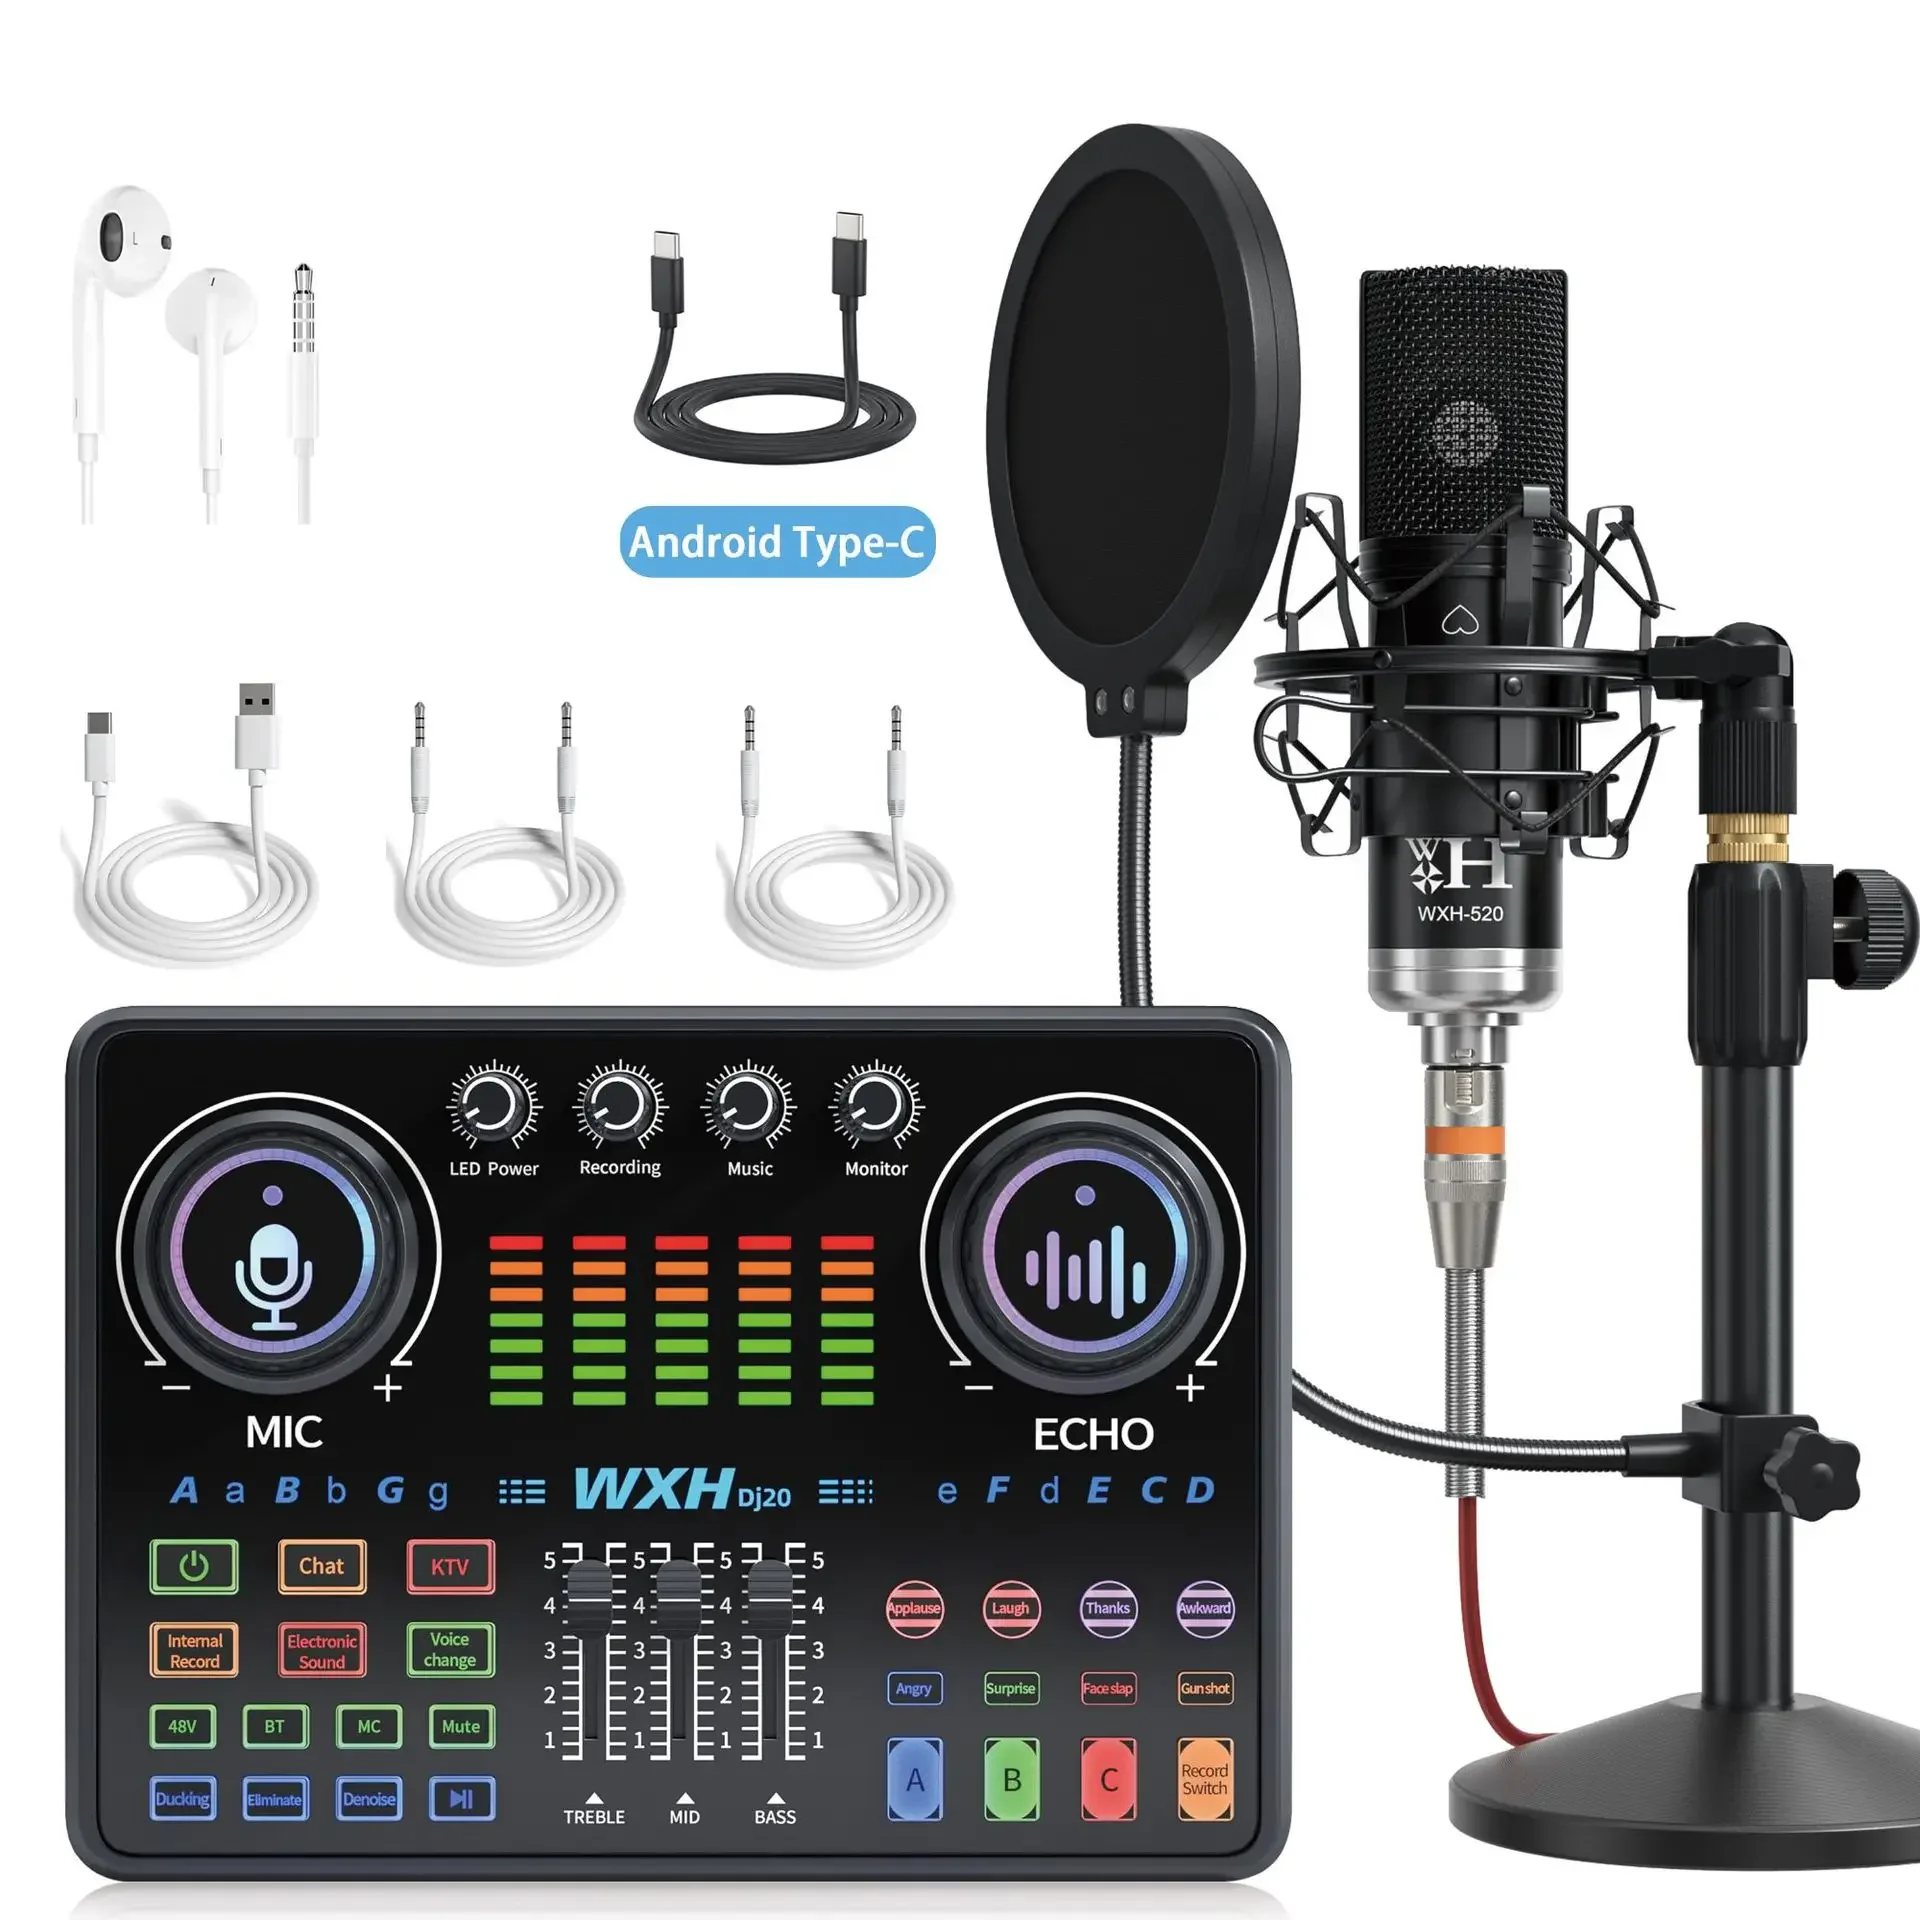 

Dj20 Sound Card Studio Mixer WXH520 Noise Reduction Microphone Singing Voice Live Broadcast Phone Computer Record USB Sound Set